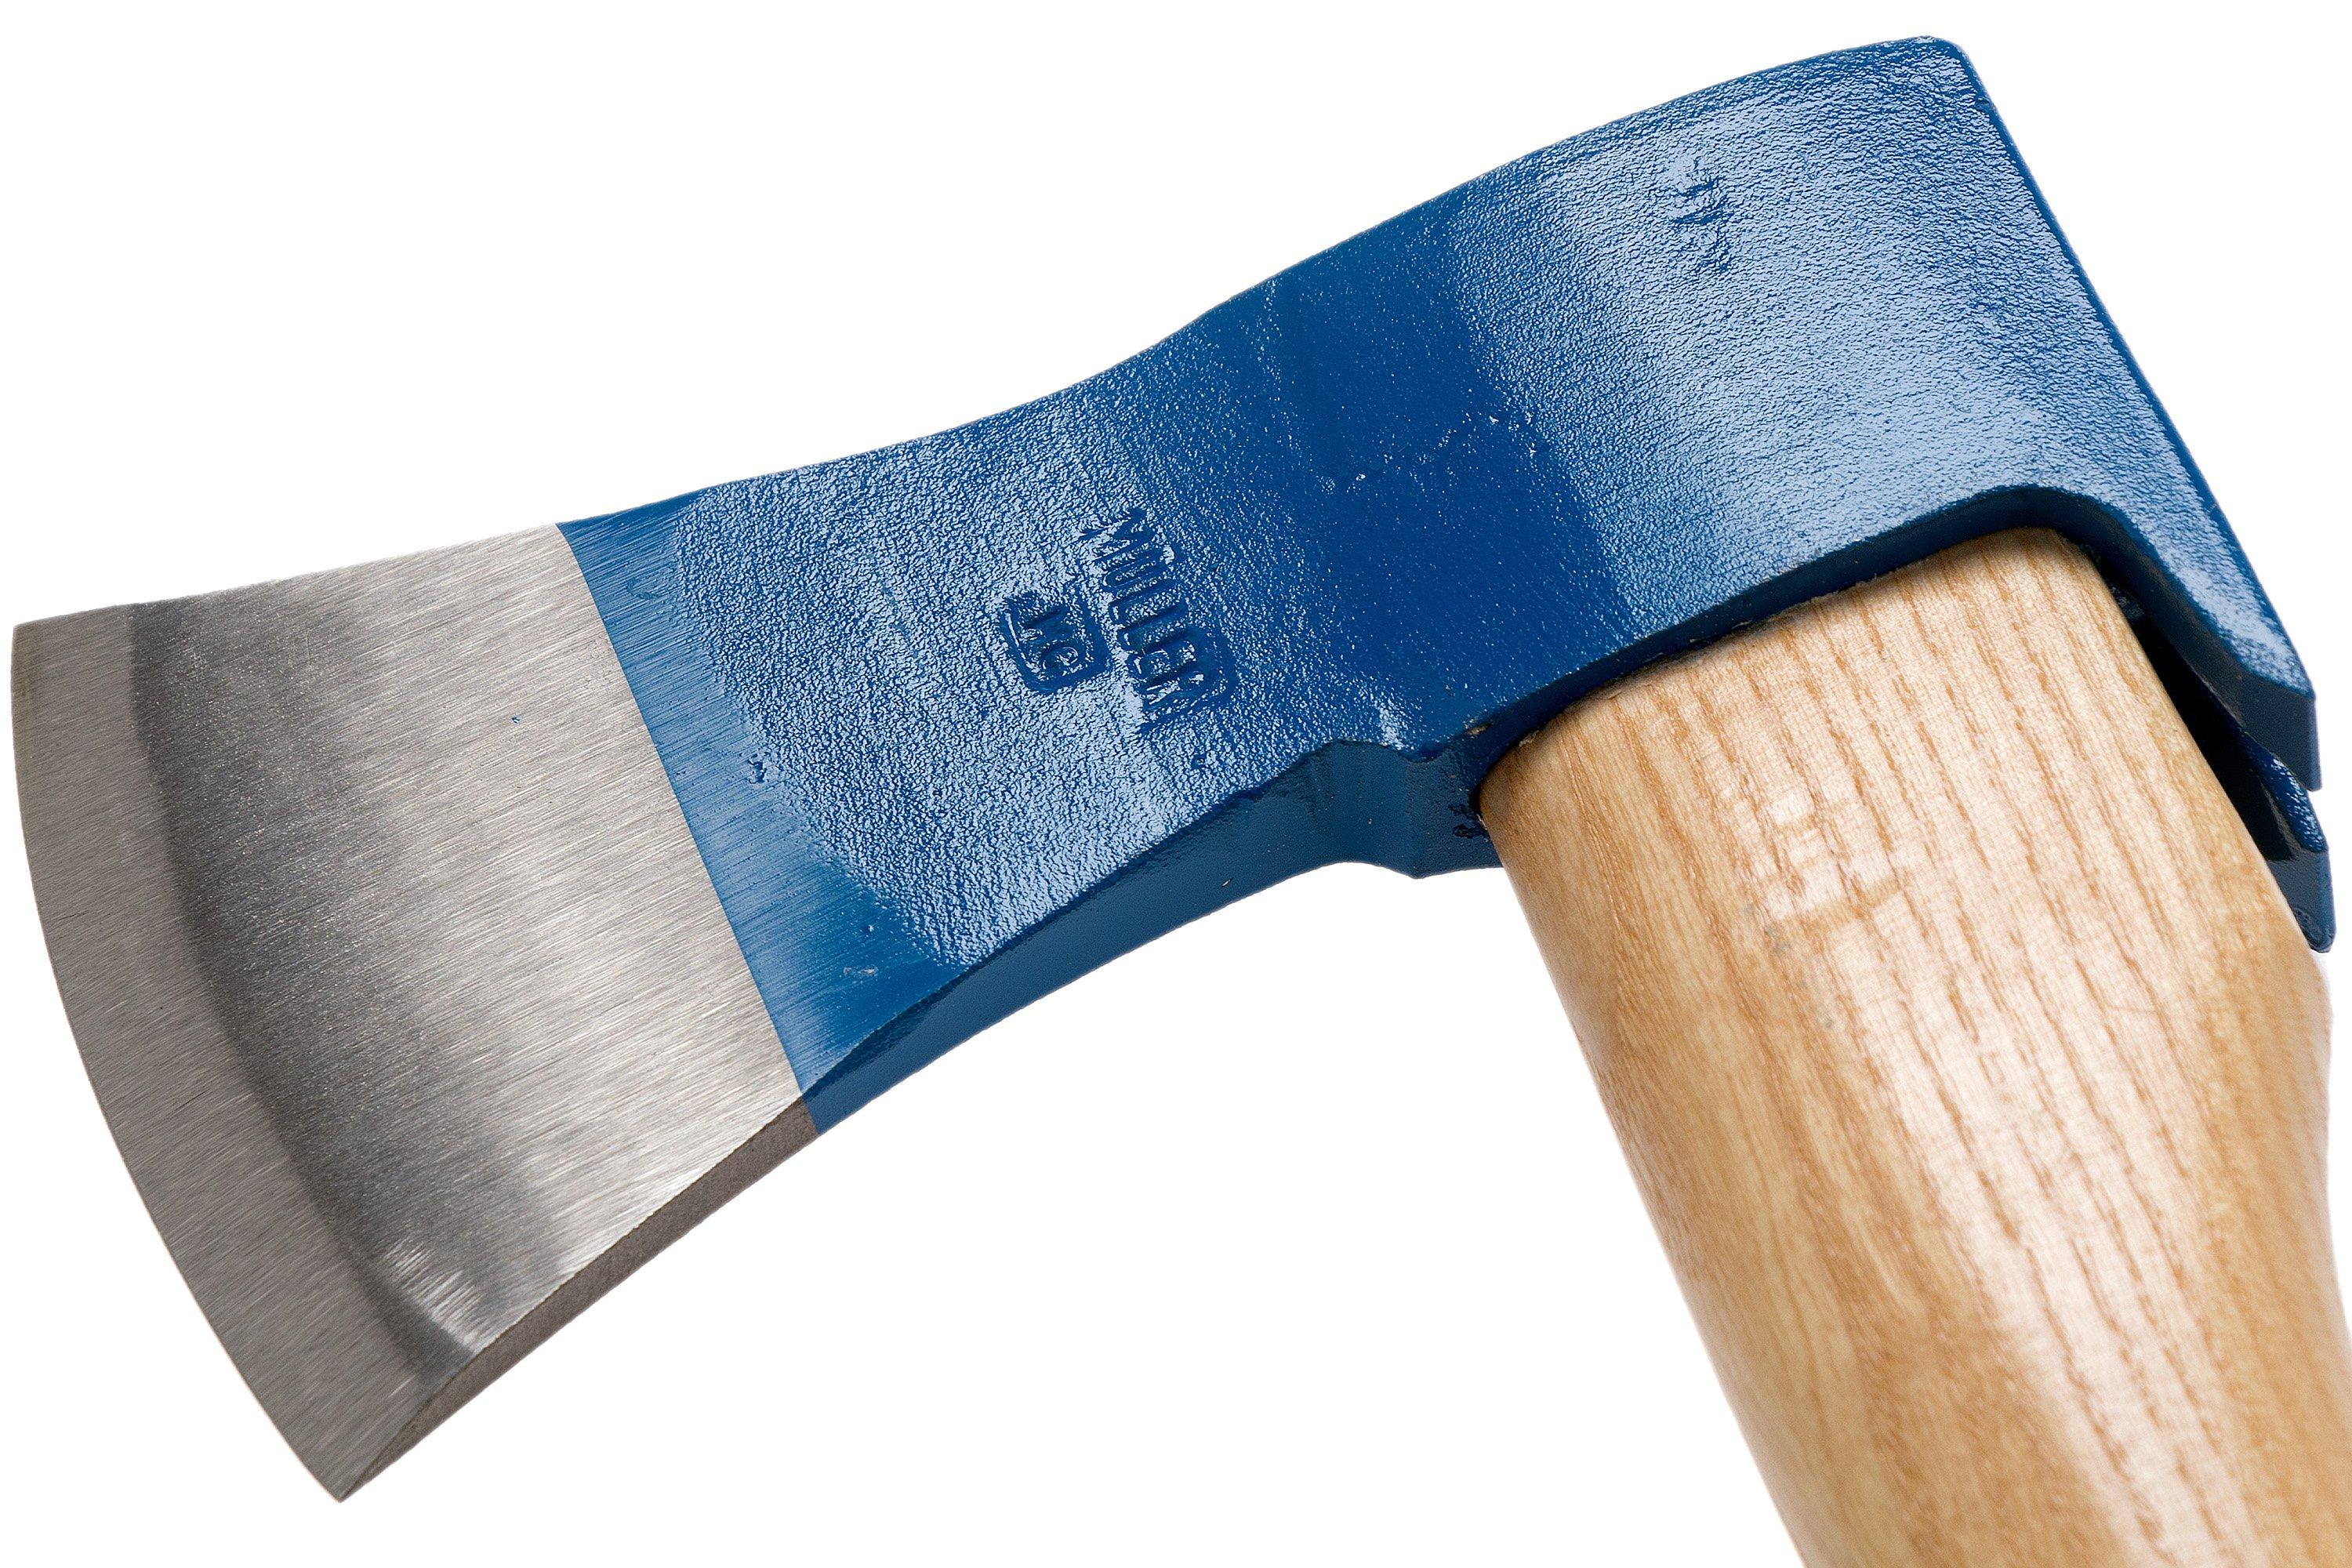 Sharpening your axe  Gränsfors Bruk Sweden